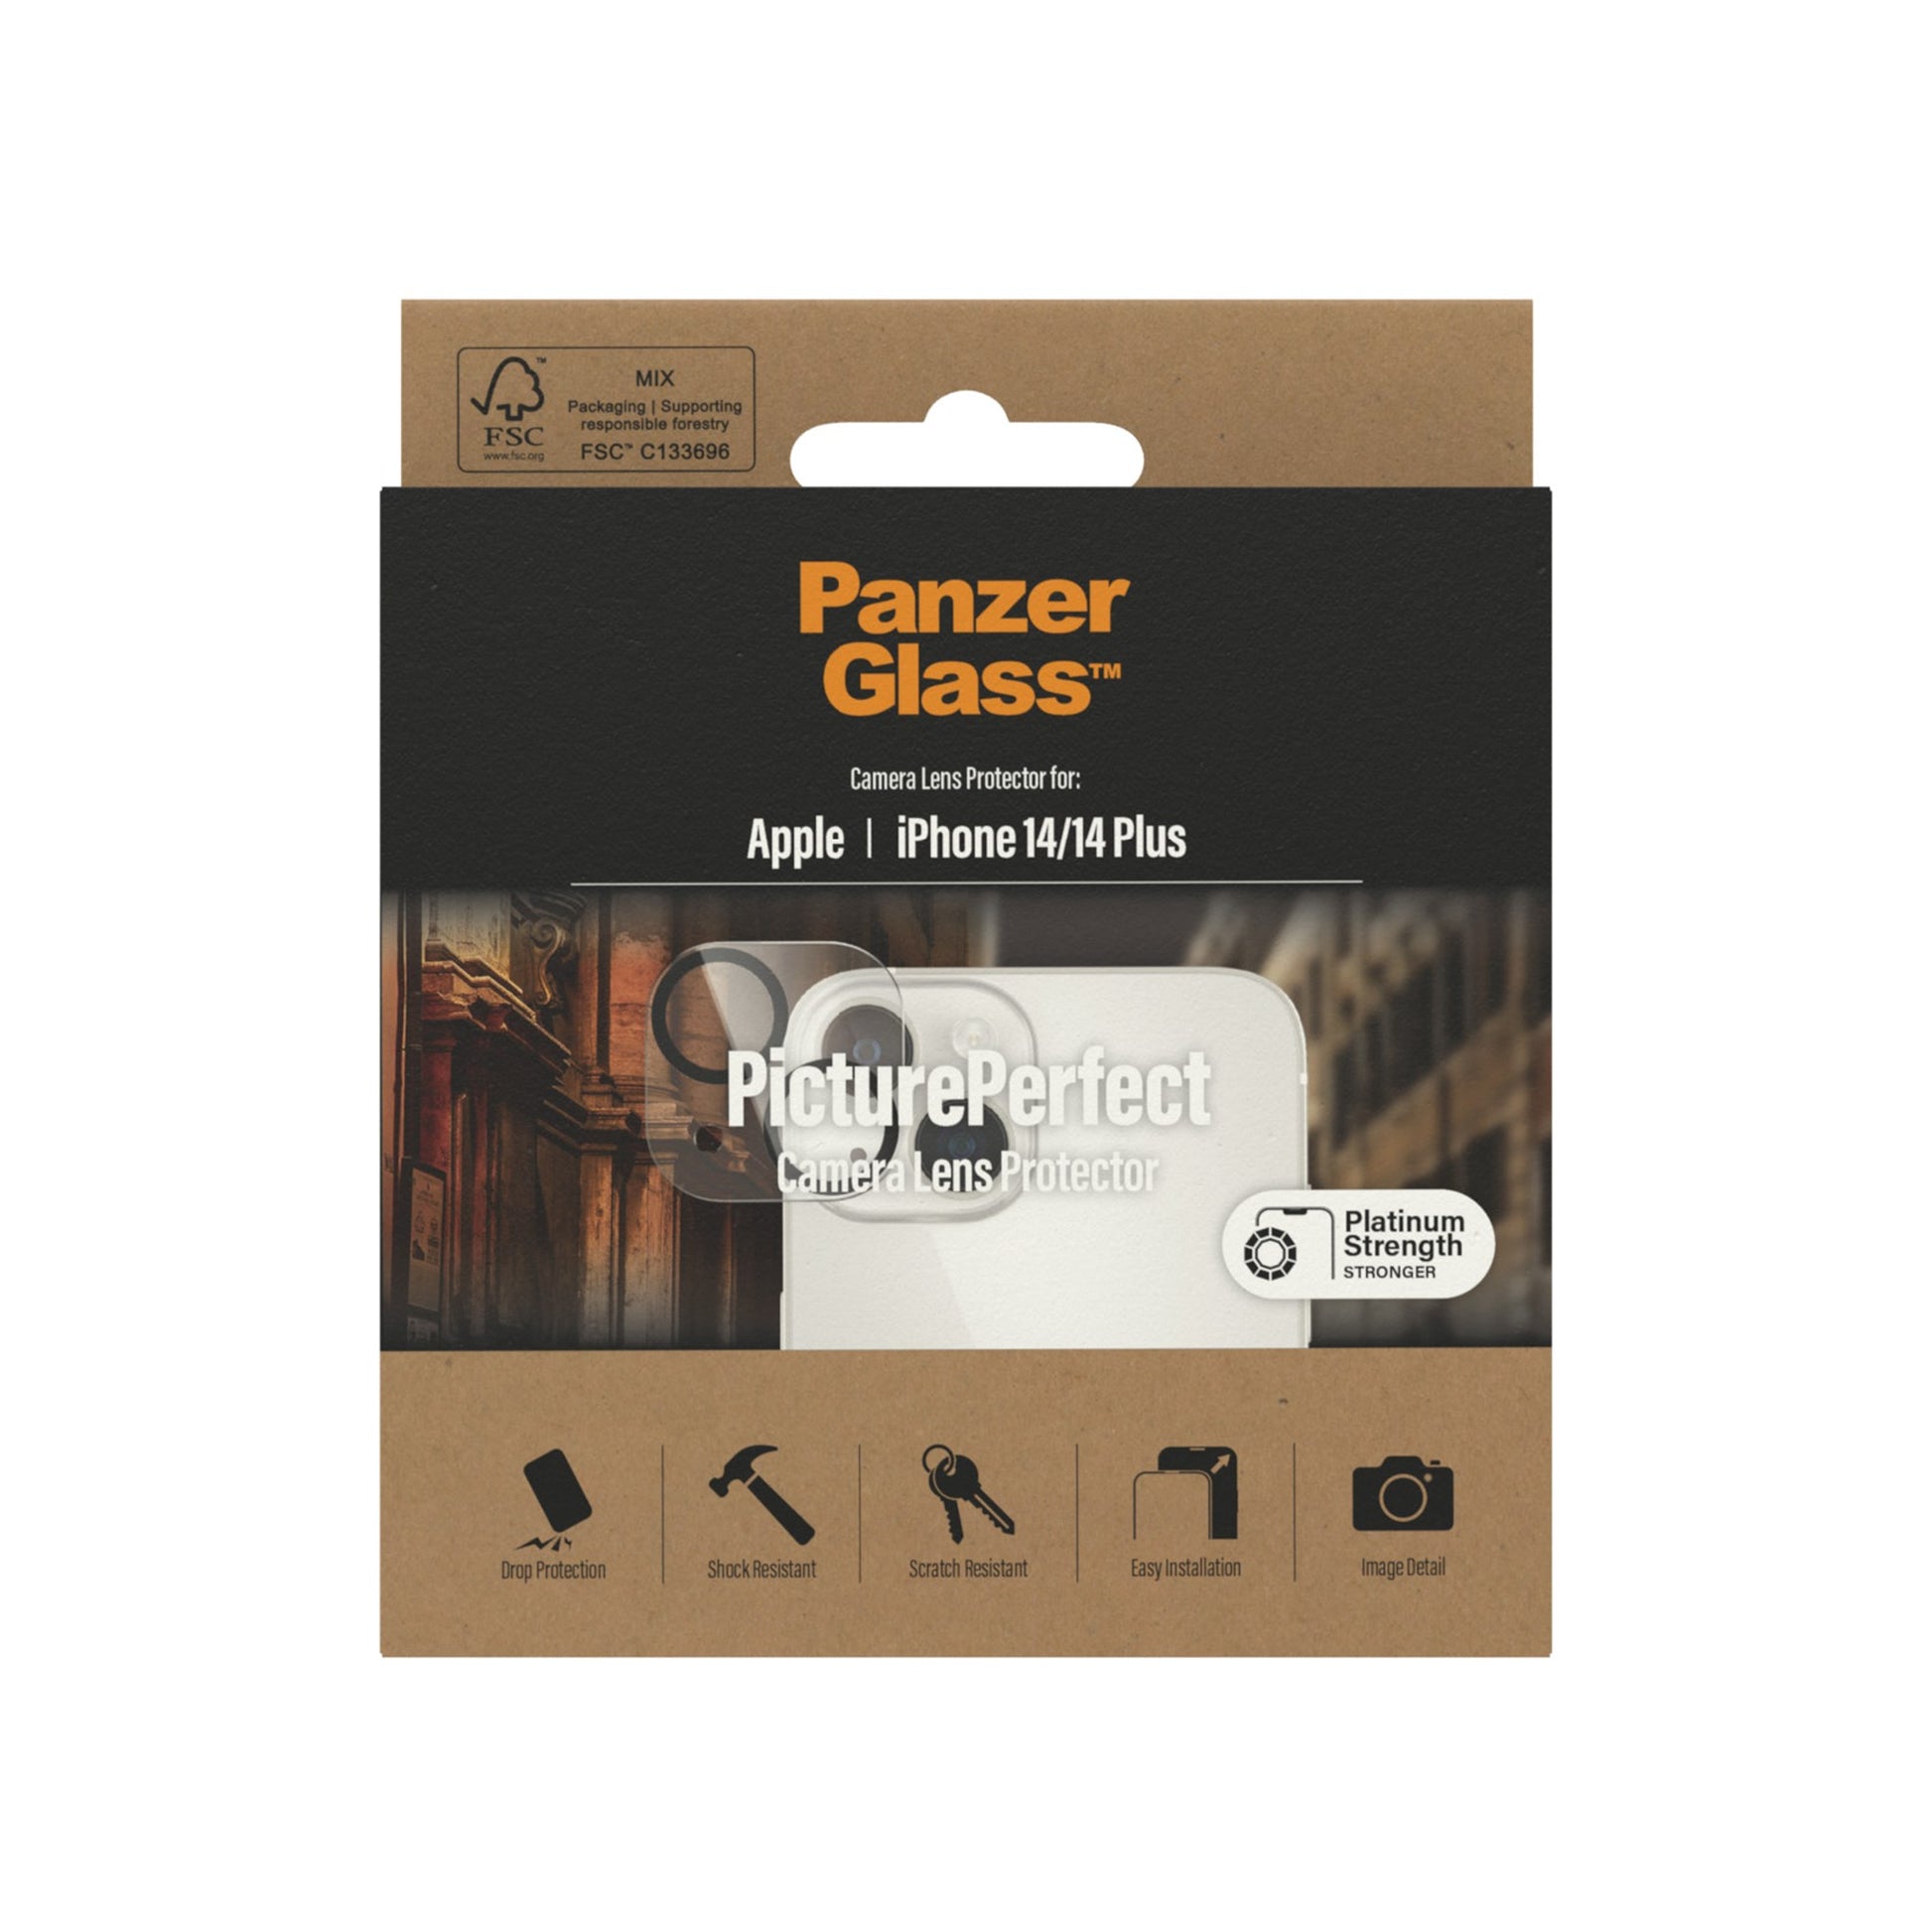 PanzerGlass® PicturePerfect Camera Lens Protector Apple iPhone 14 | 14 Plus 3